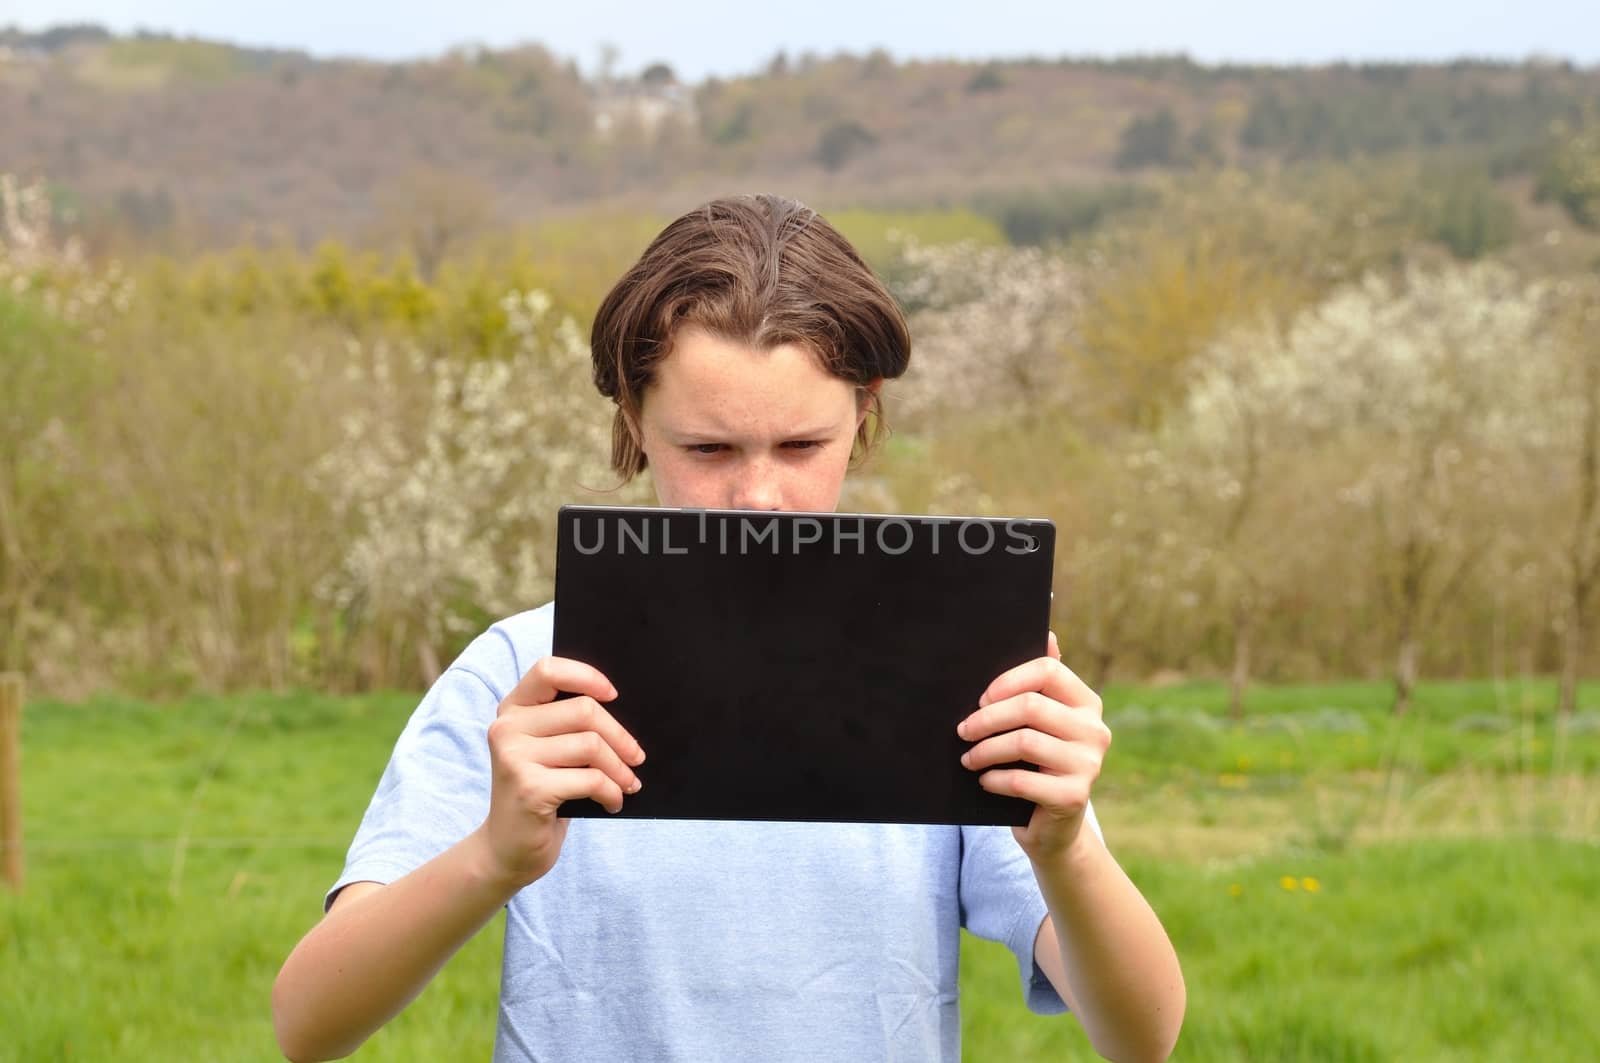 Girl using digital tablet by BZH22